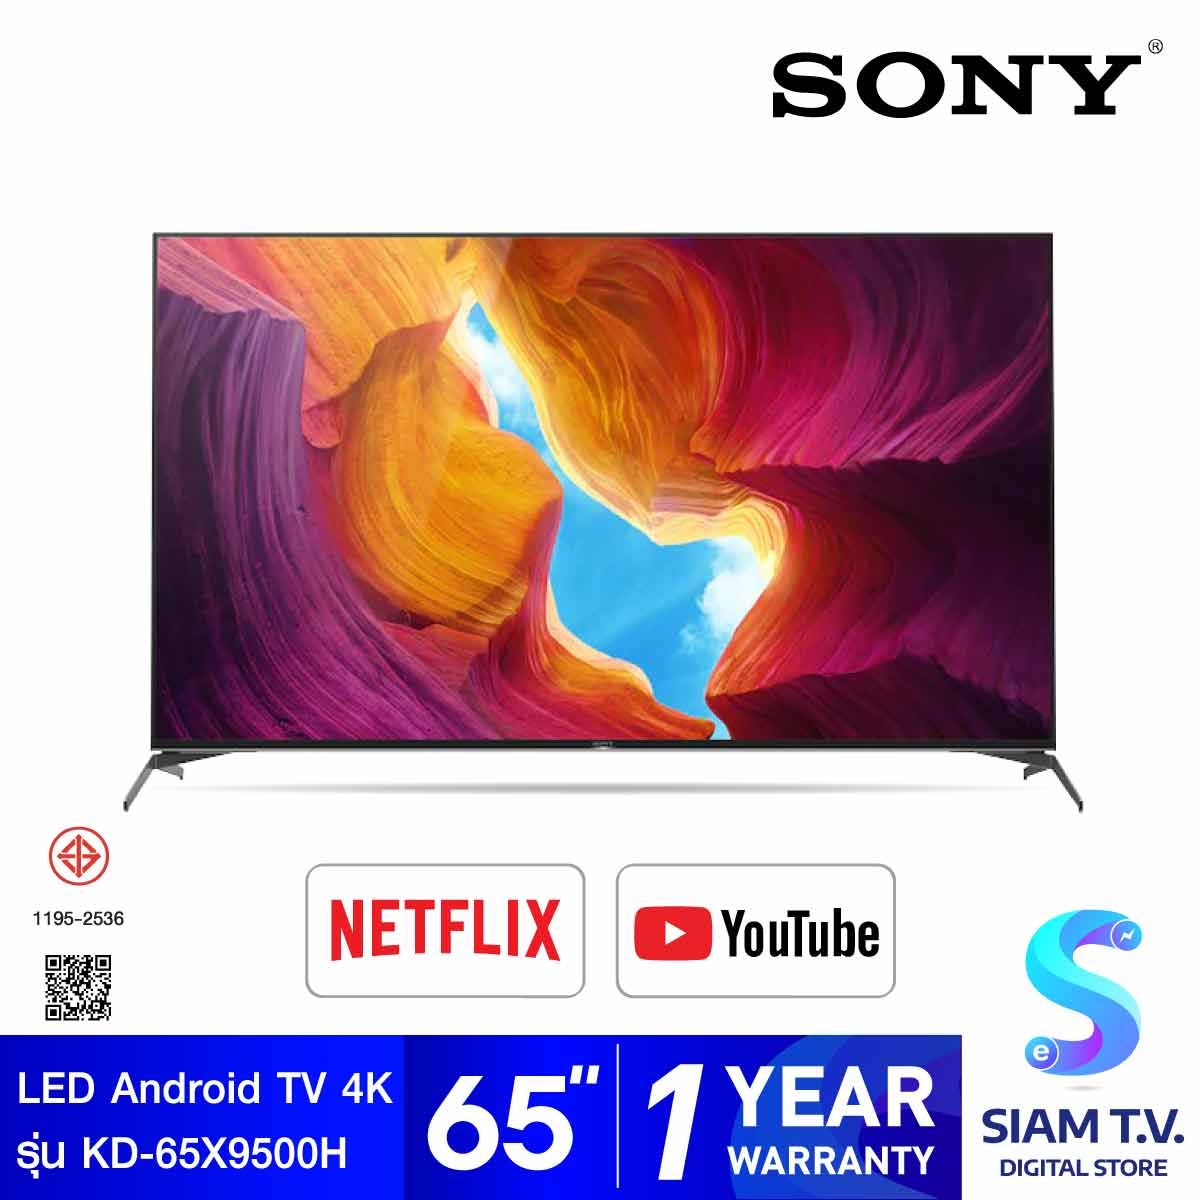 Sony LED Android TV 4K รุ่น KD-65X9500H  4K Ultra HD High Dynamic Range   HDR  สมาร์ททีวี